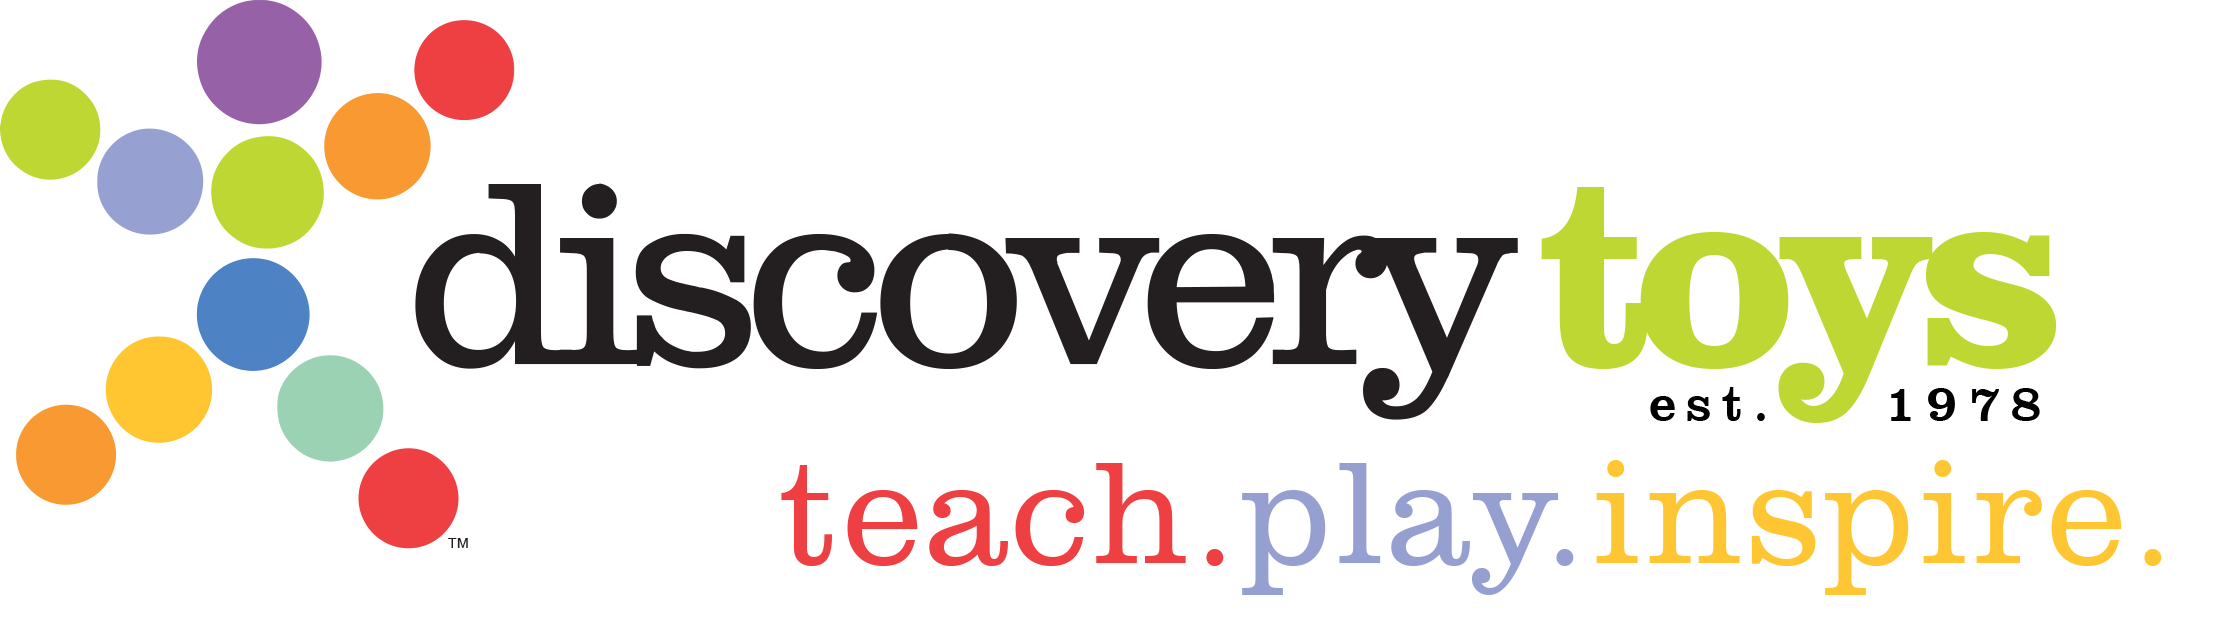 discovery toys logo